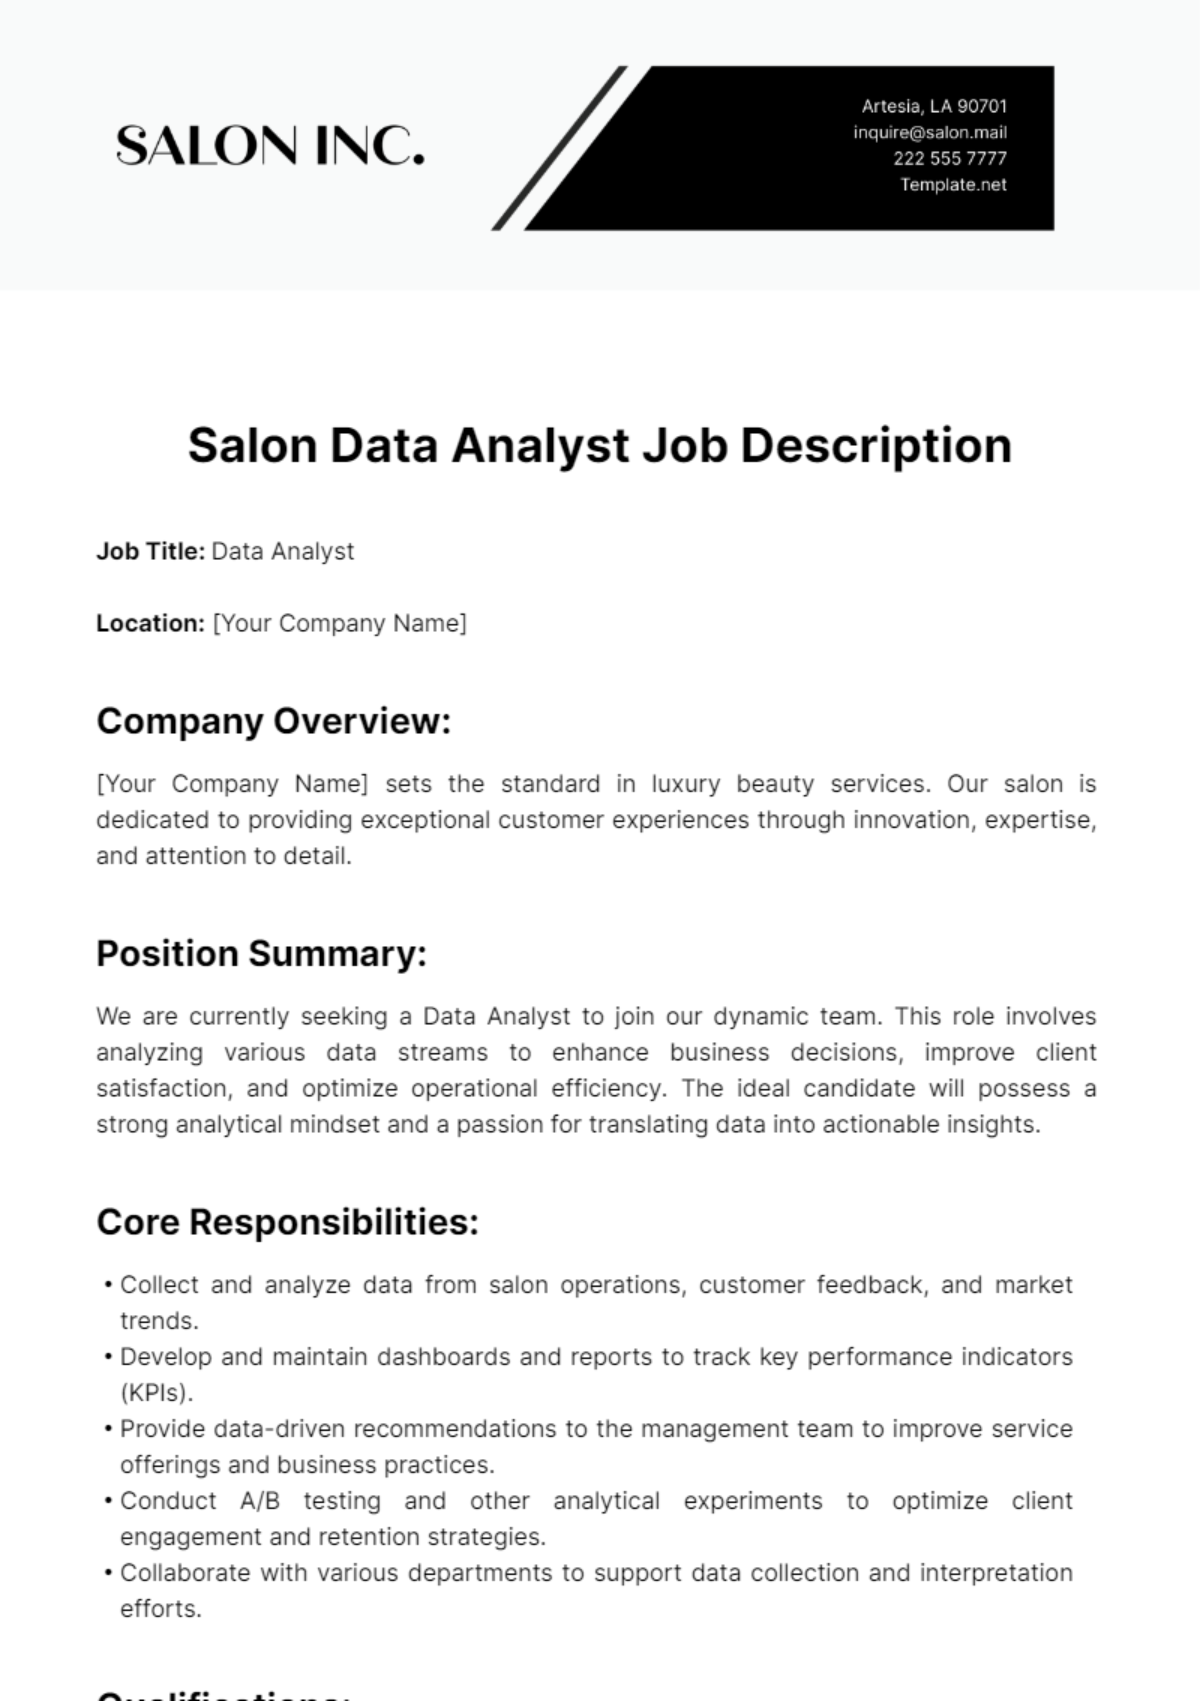 Free Salon Data Analyst Job Description Template